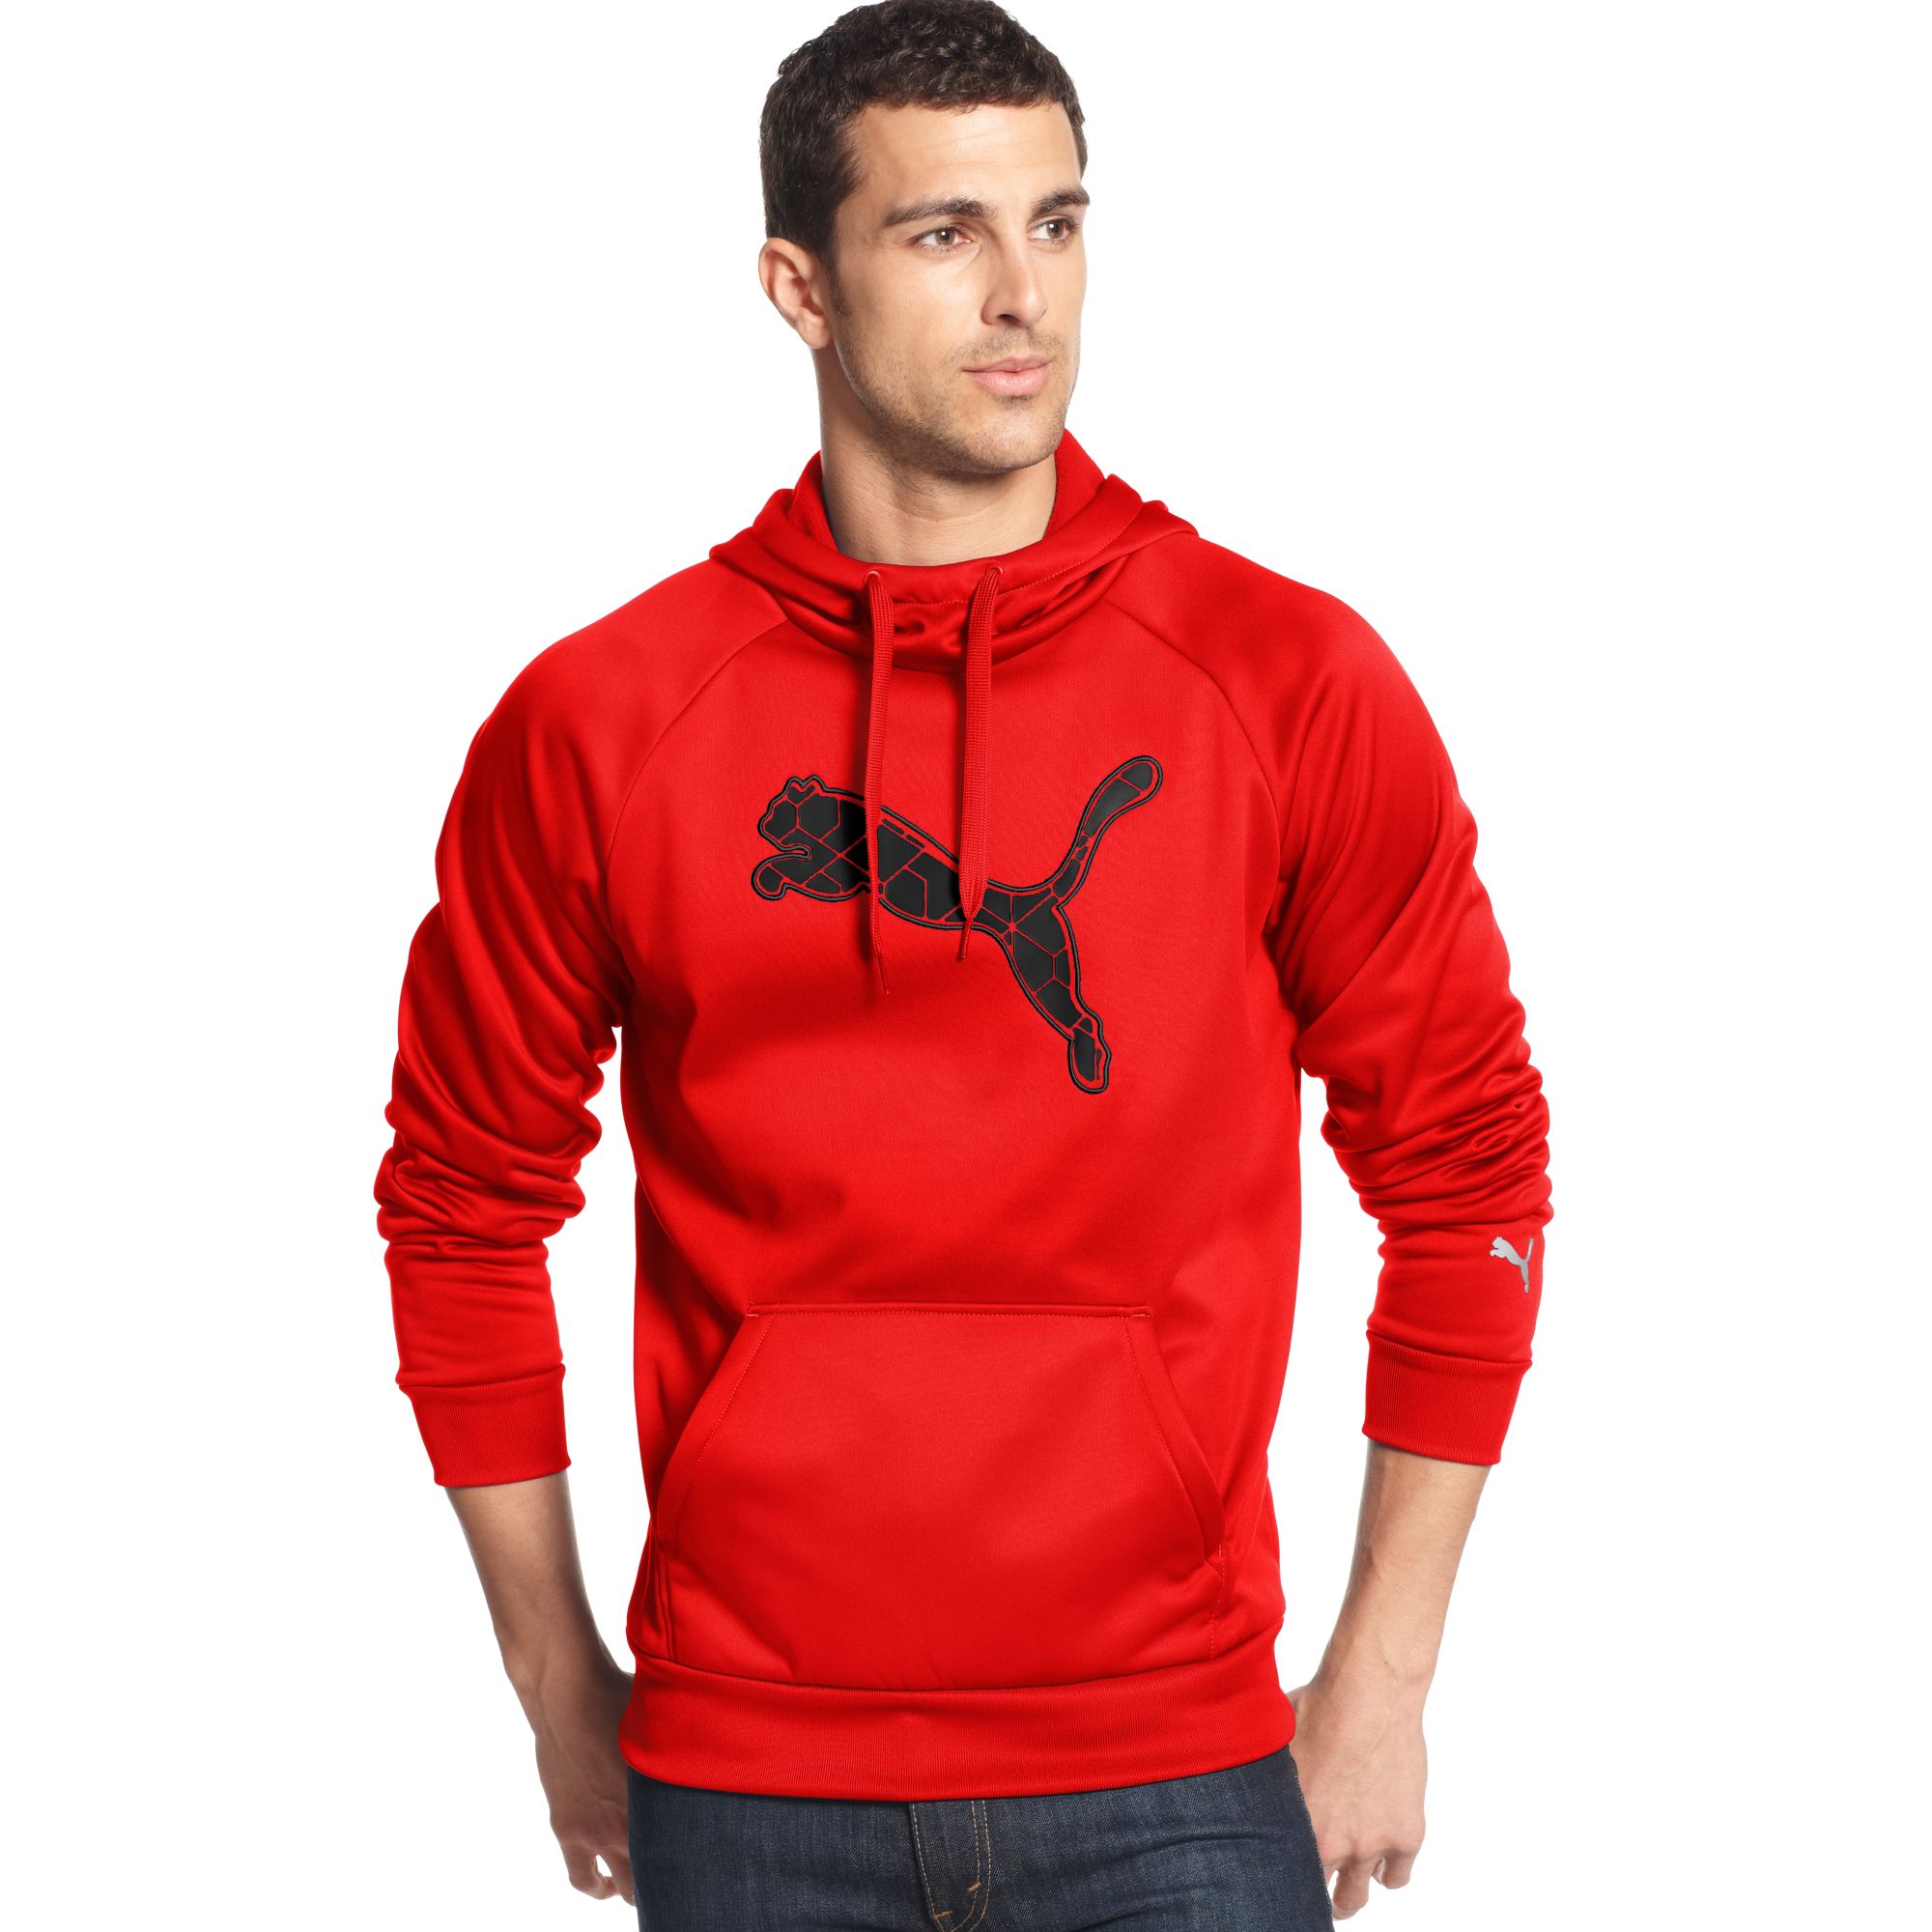 red puma sweatshirt